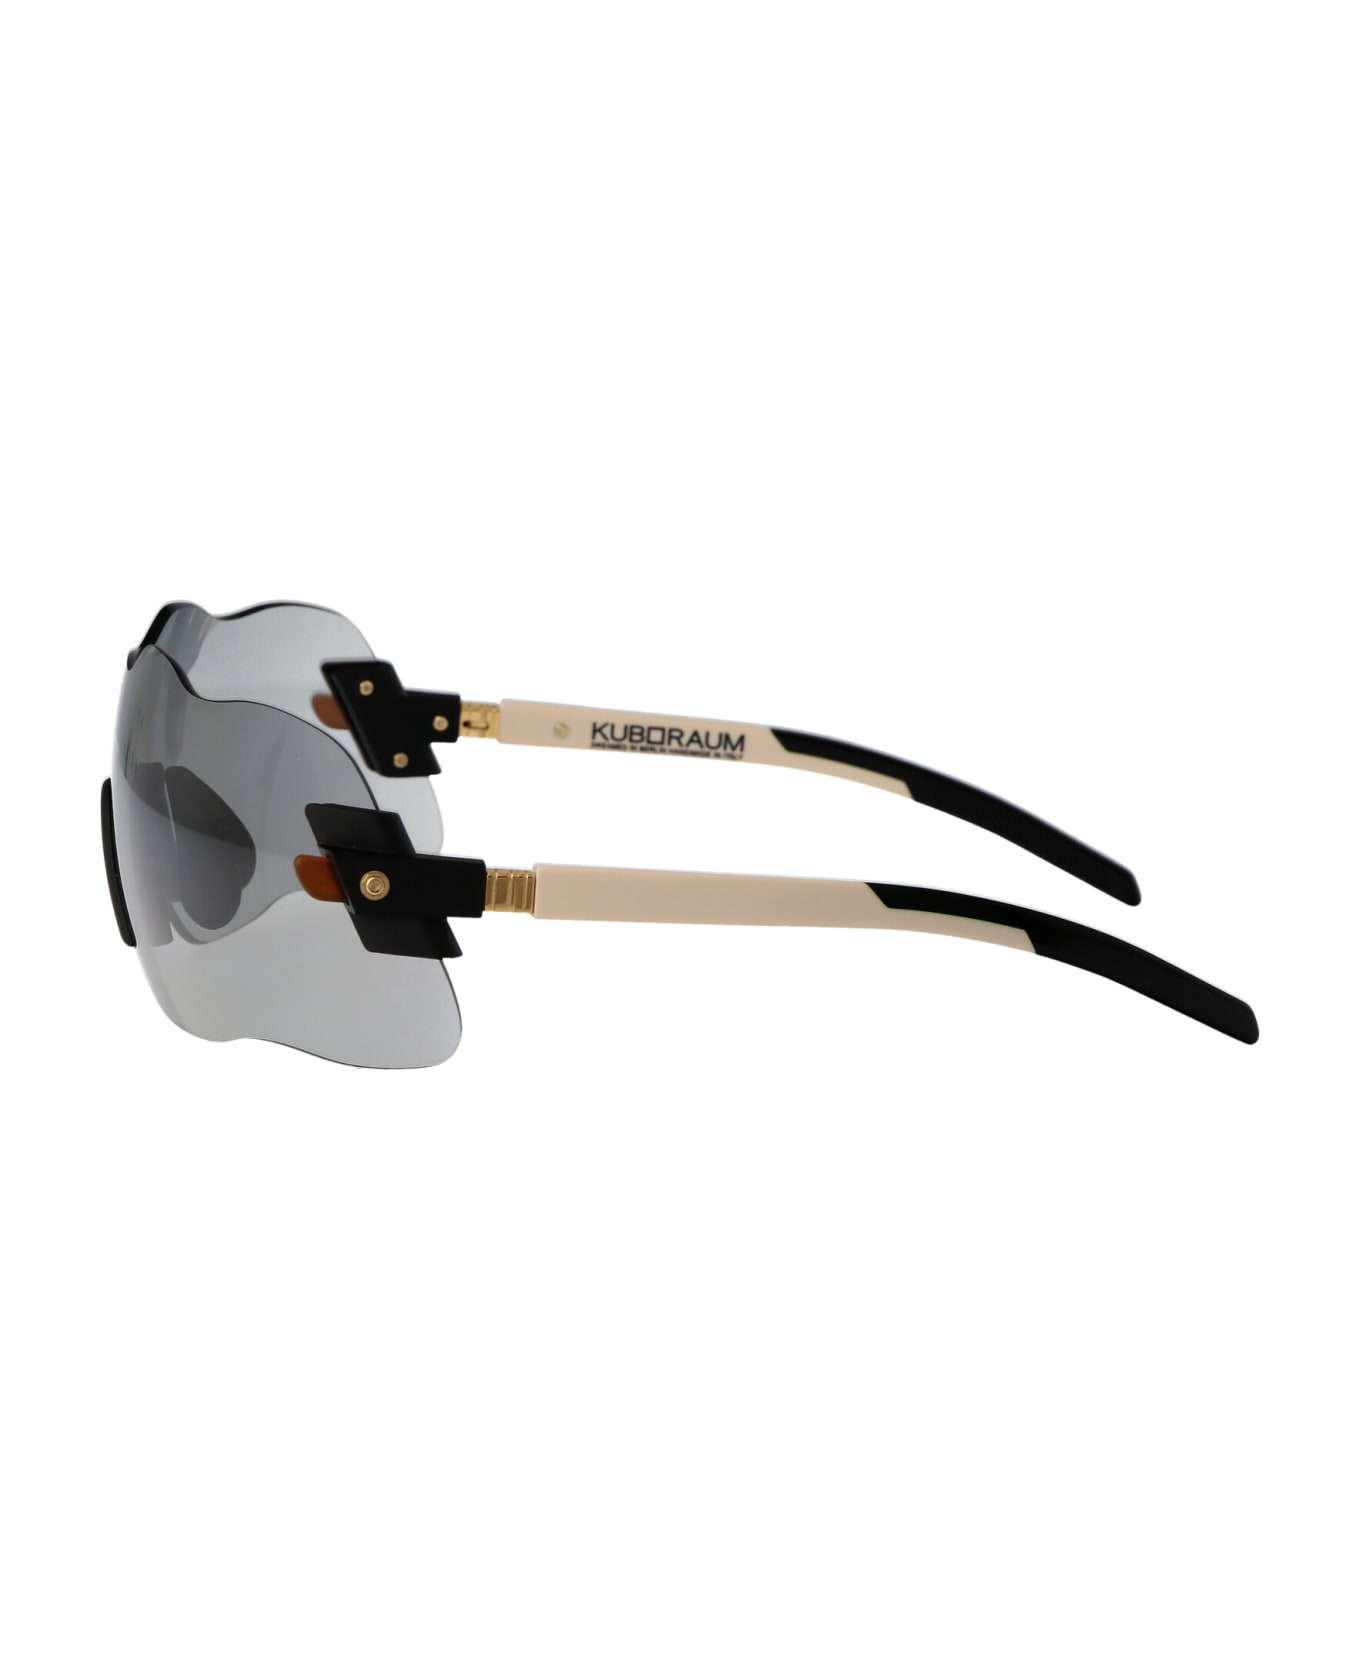 Kuboraum Maske E50 Sunglasses - BW GREY サングラス